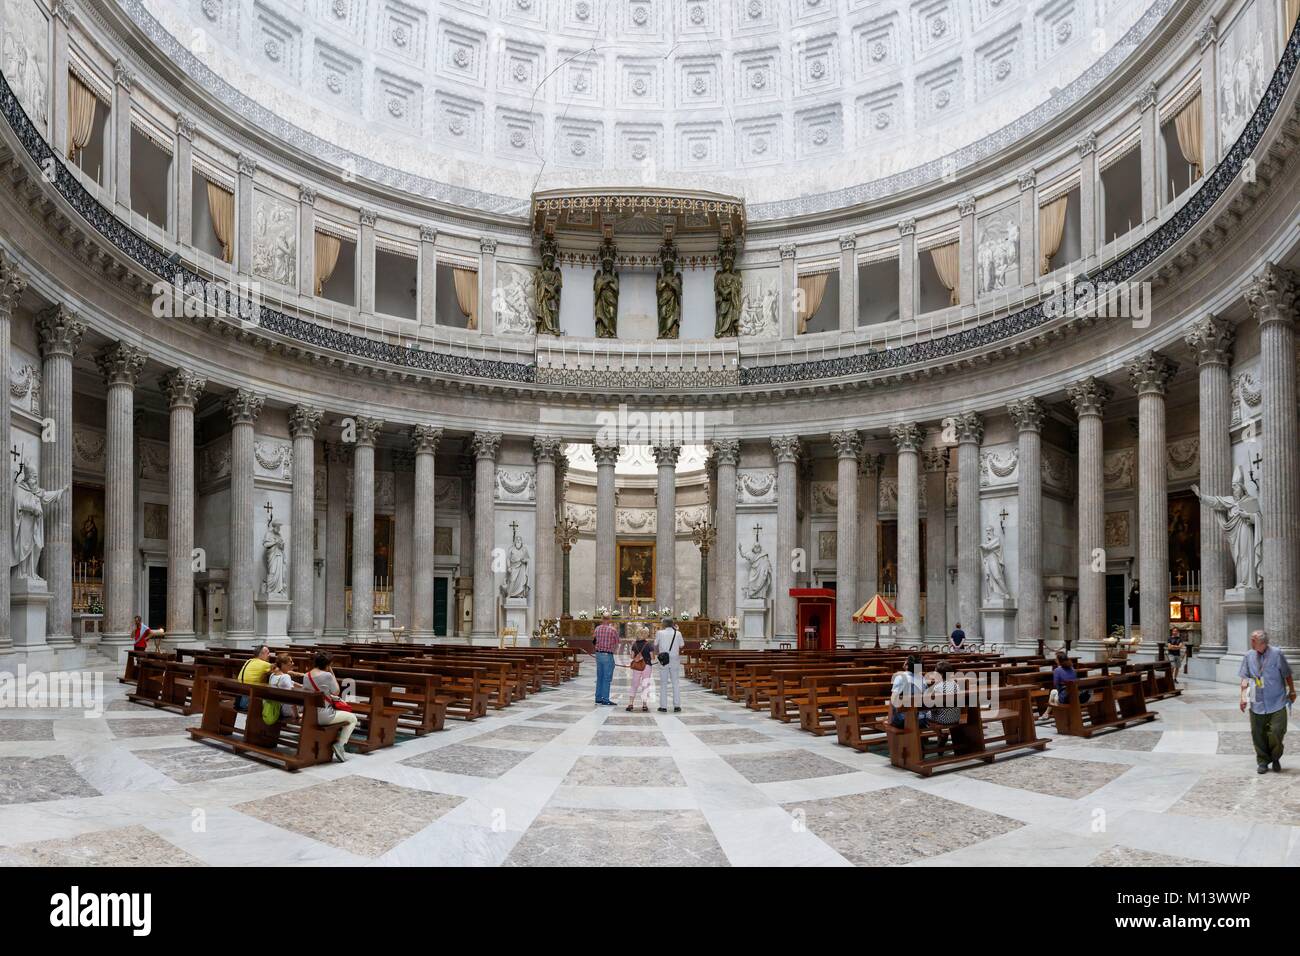 Italien, Kampanien, Neapel, die historische Altstadt als Weltkulturerbe von der UNESCO, der Basilika San Francesco Di Paola aufgeführt Stockfoto